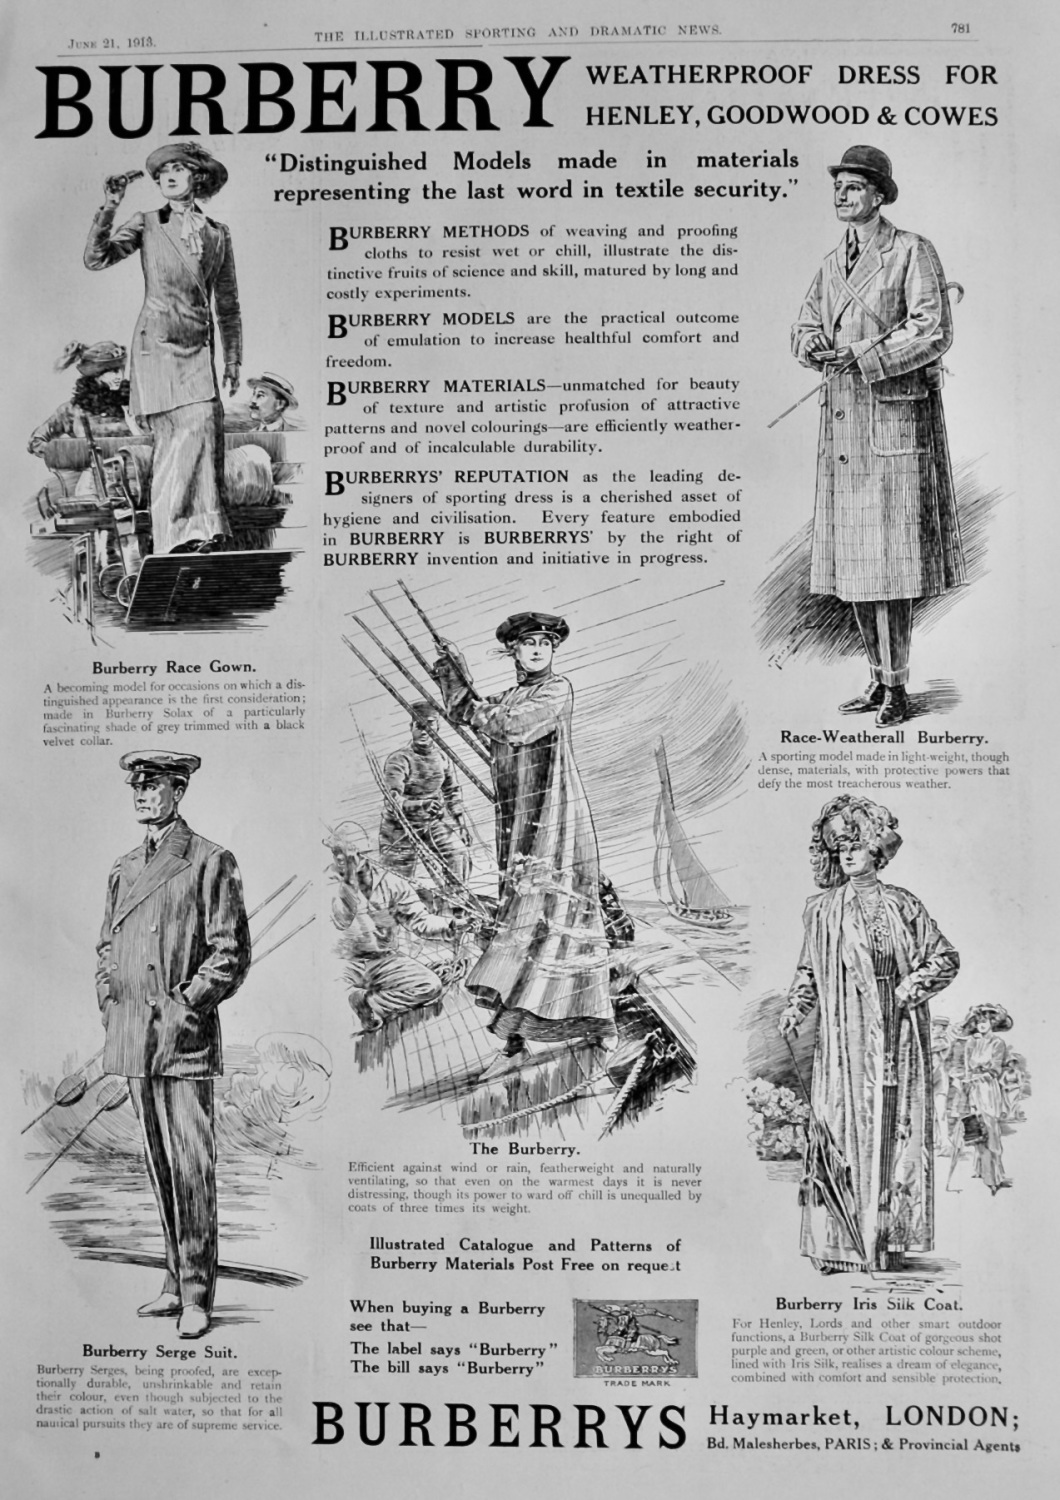 Burberry,  Weatherproof Dress for Henley, Goodwood, & Cowes.  1913.